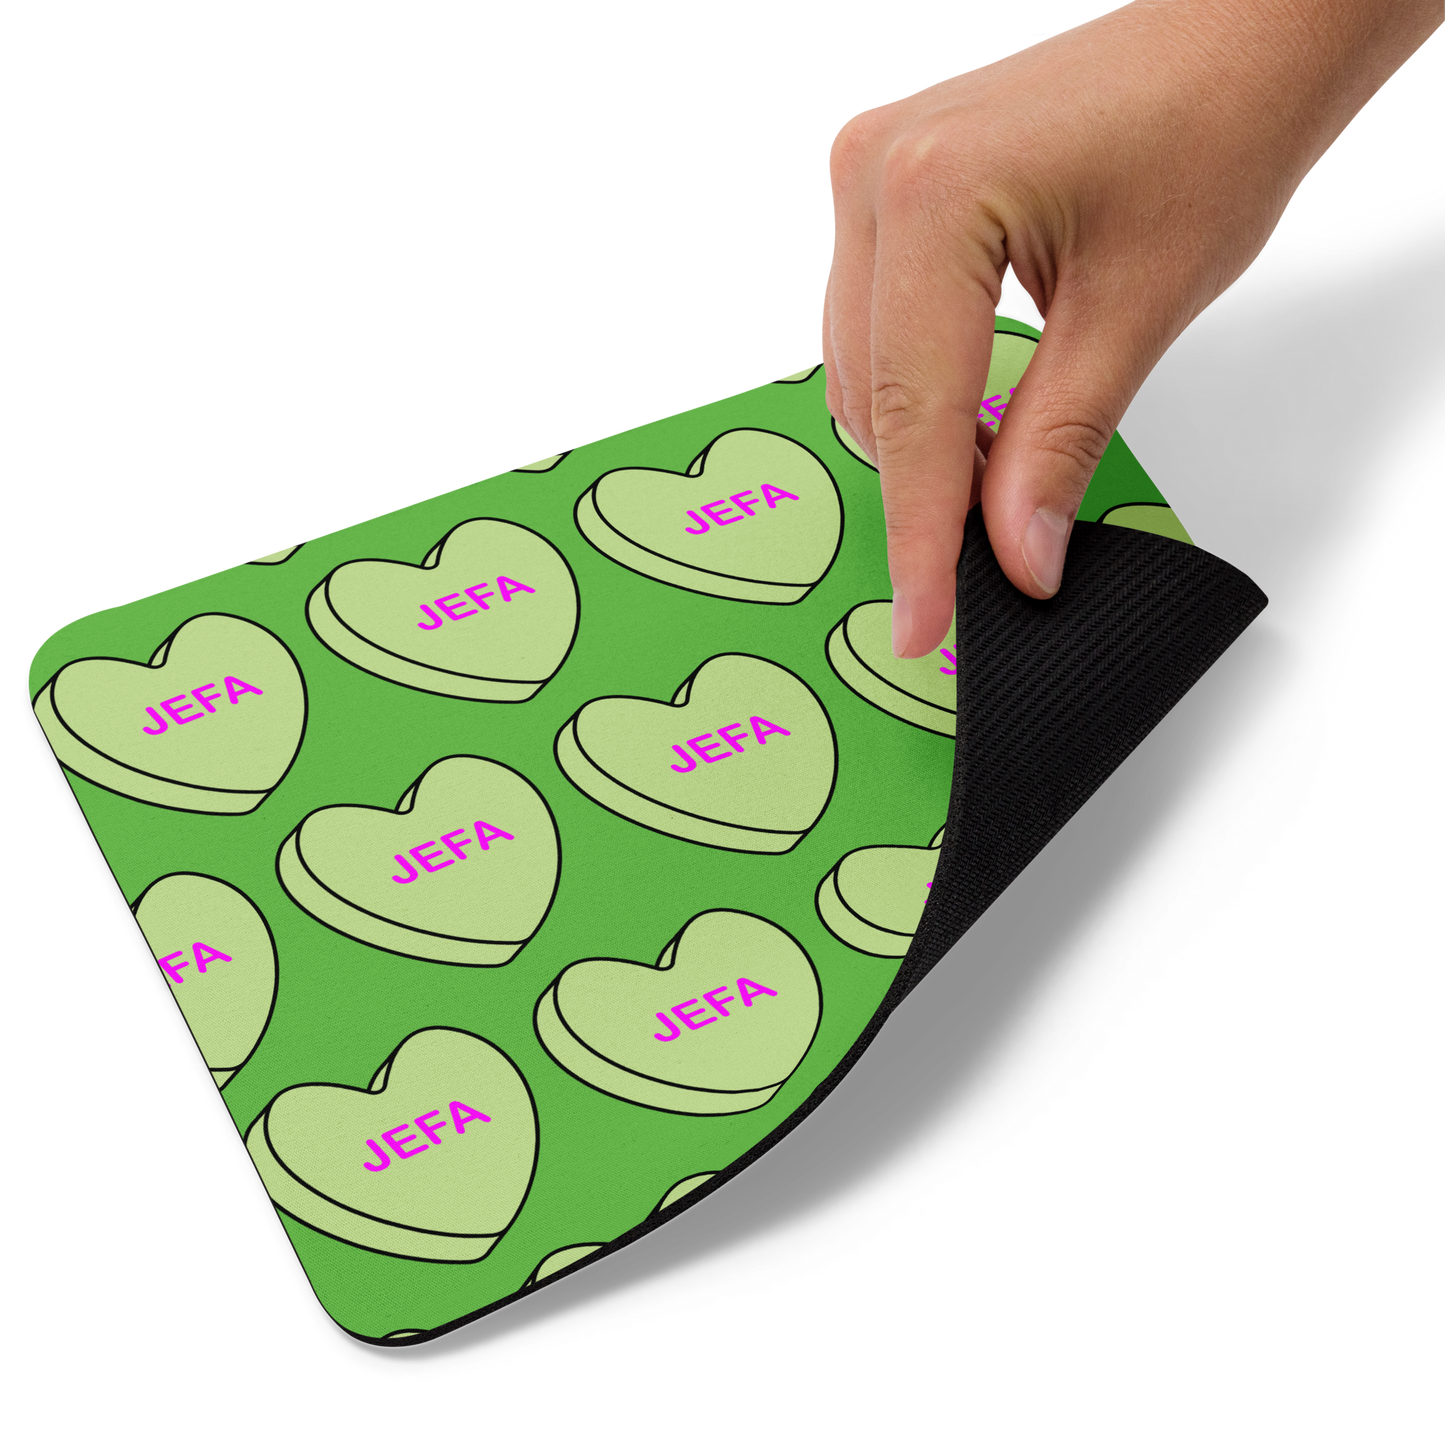 Jefa Candy Conversation Heart - Mouse pad